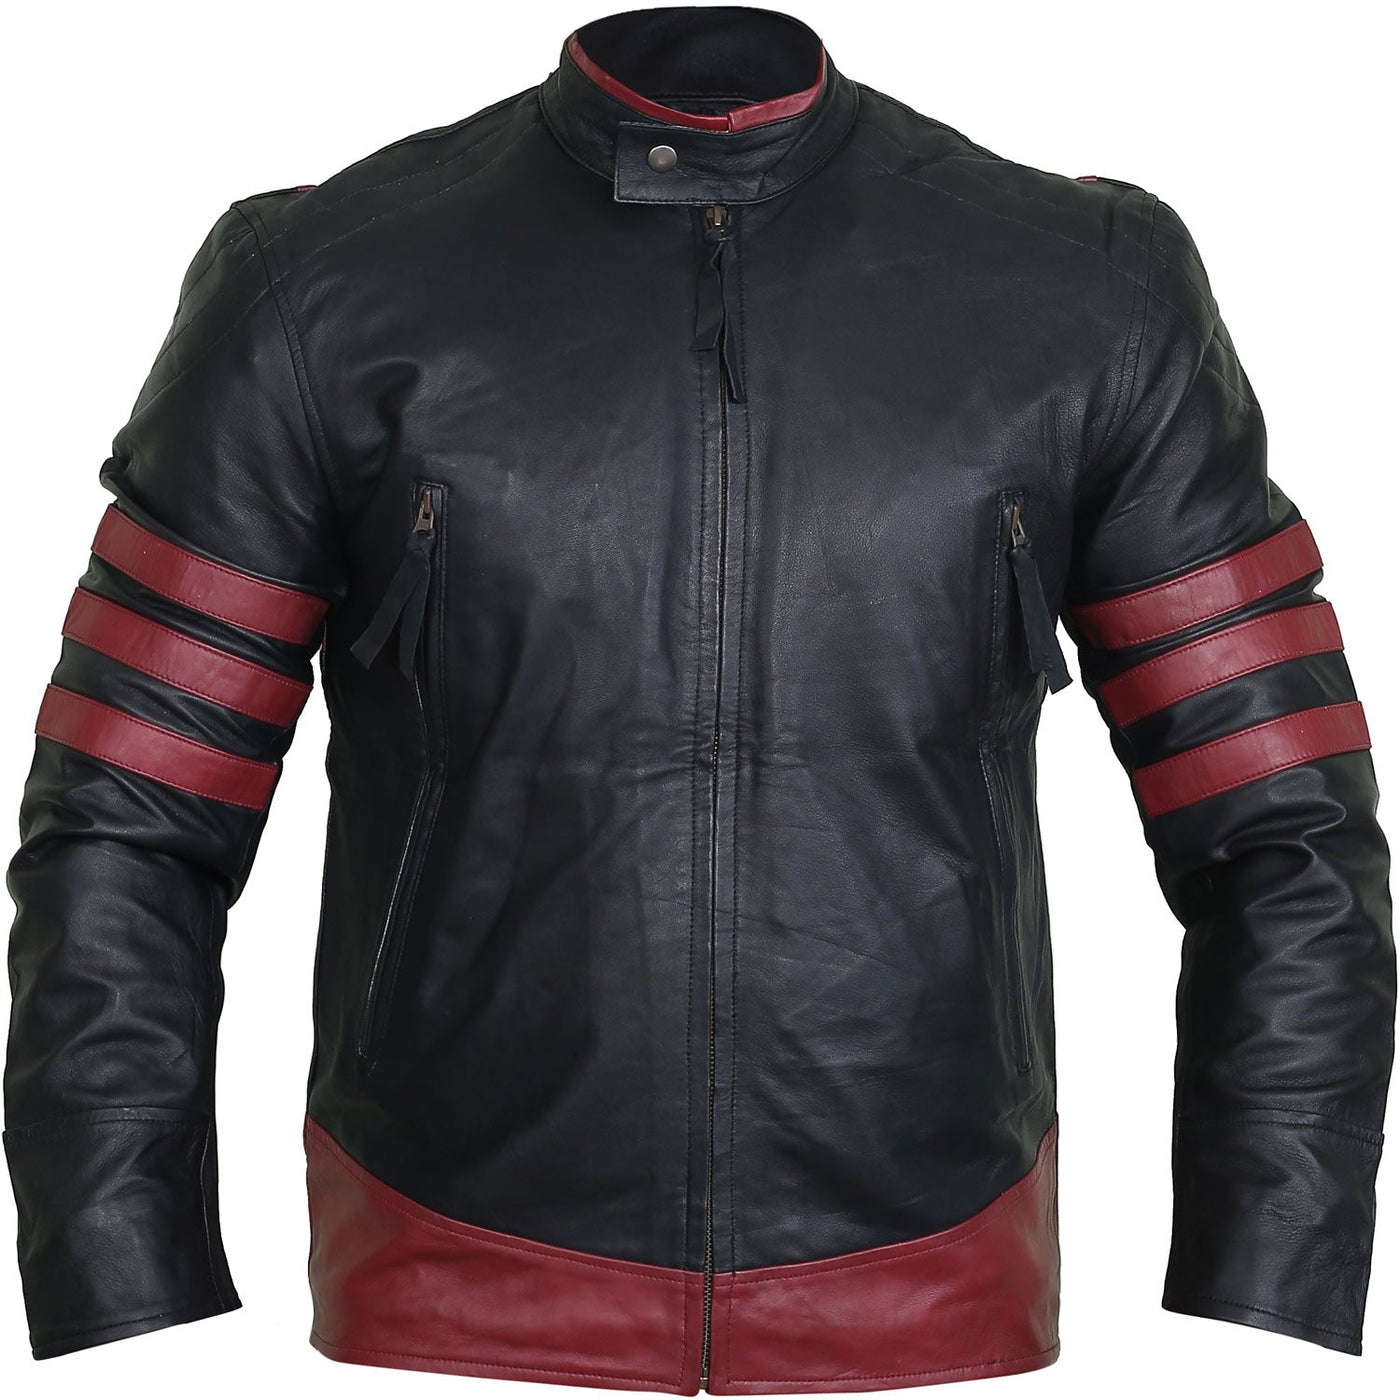 Henry Red and Black Leather Biker Jacket Front Pose